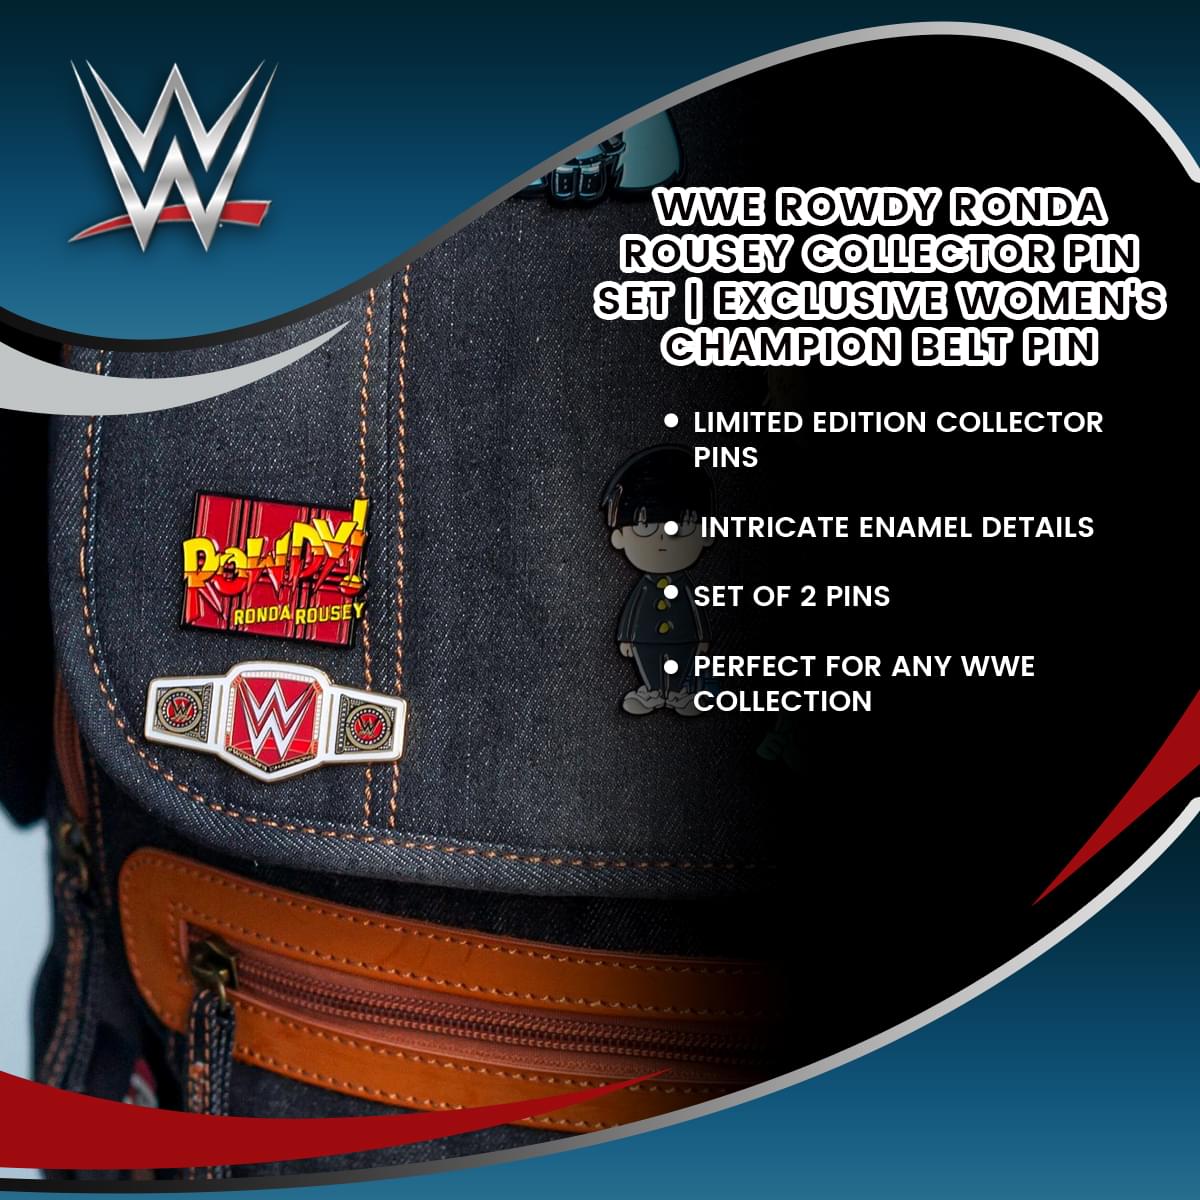 WWE Rowdy Ronda Rousey Collector Pin Set | Exclusive Women's Champion Belt Pin